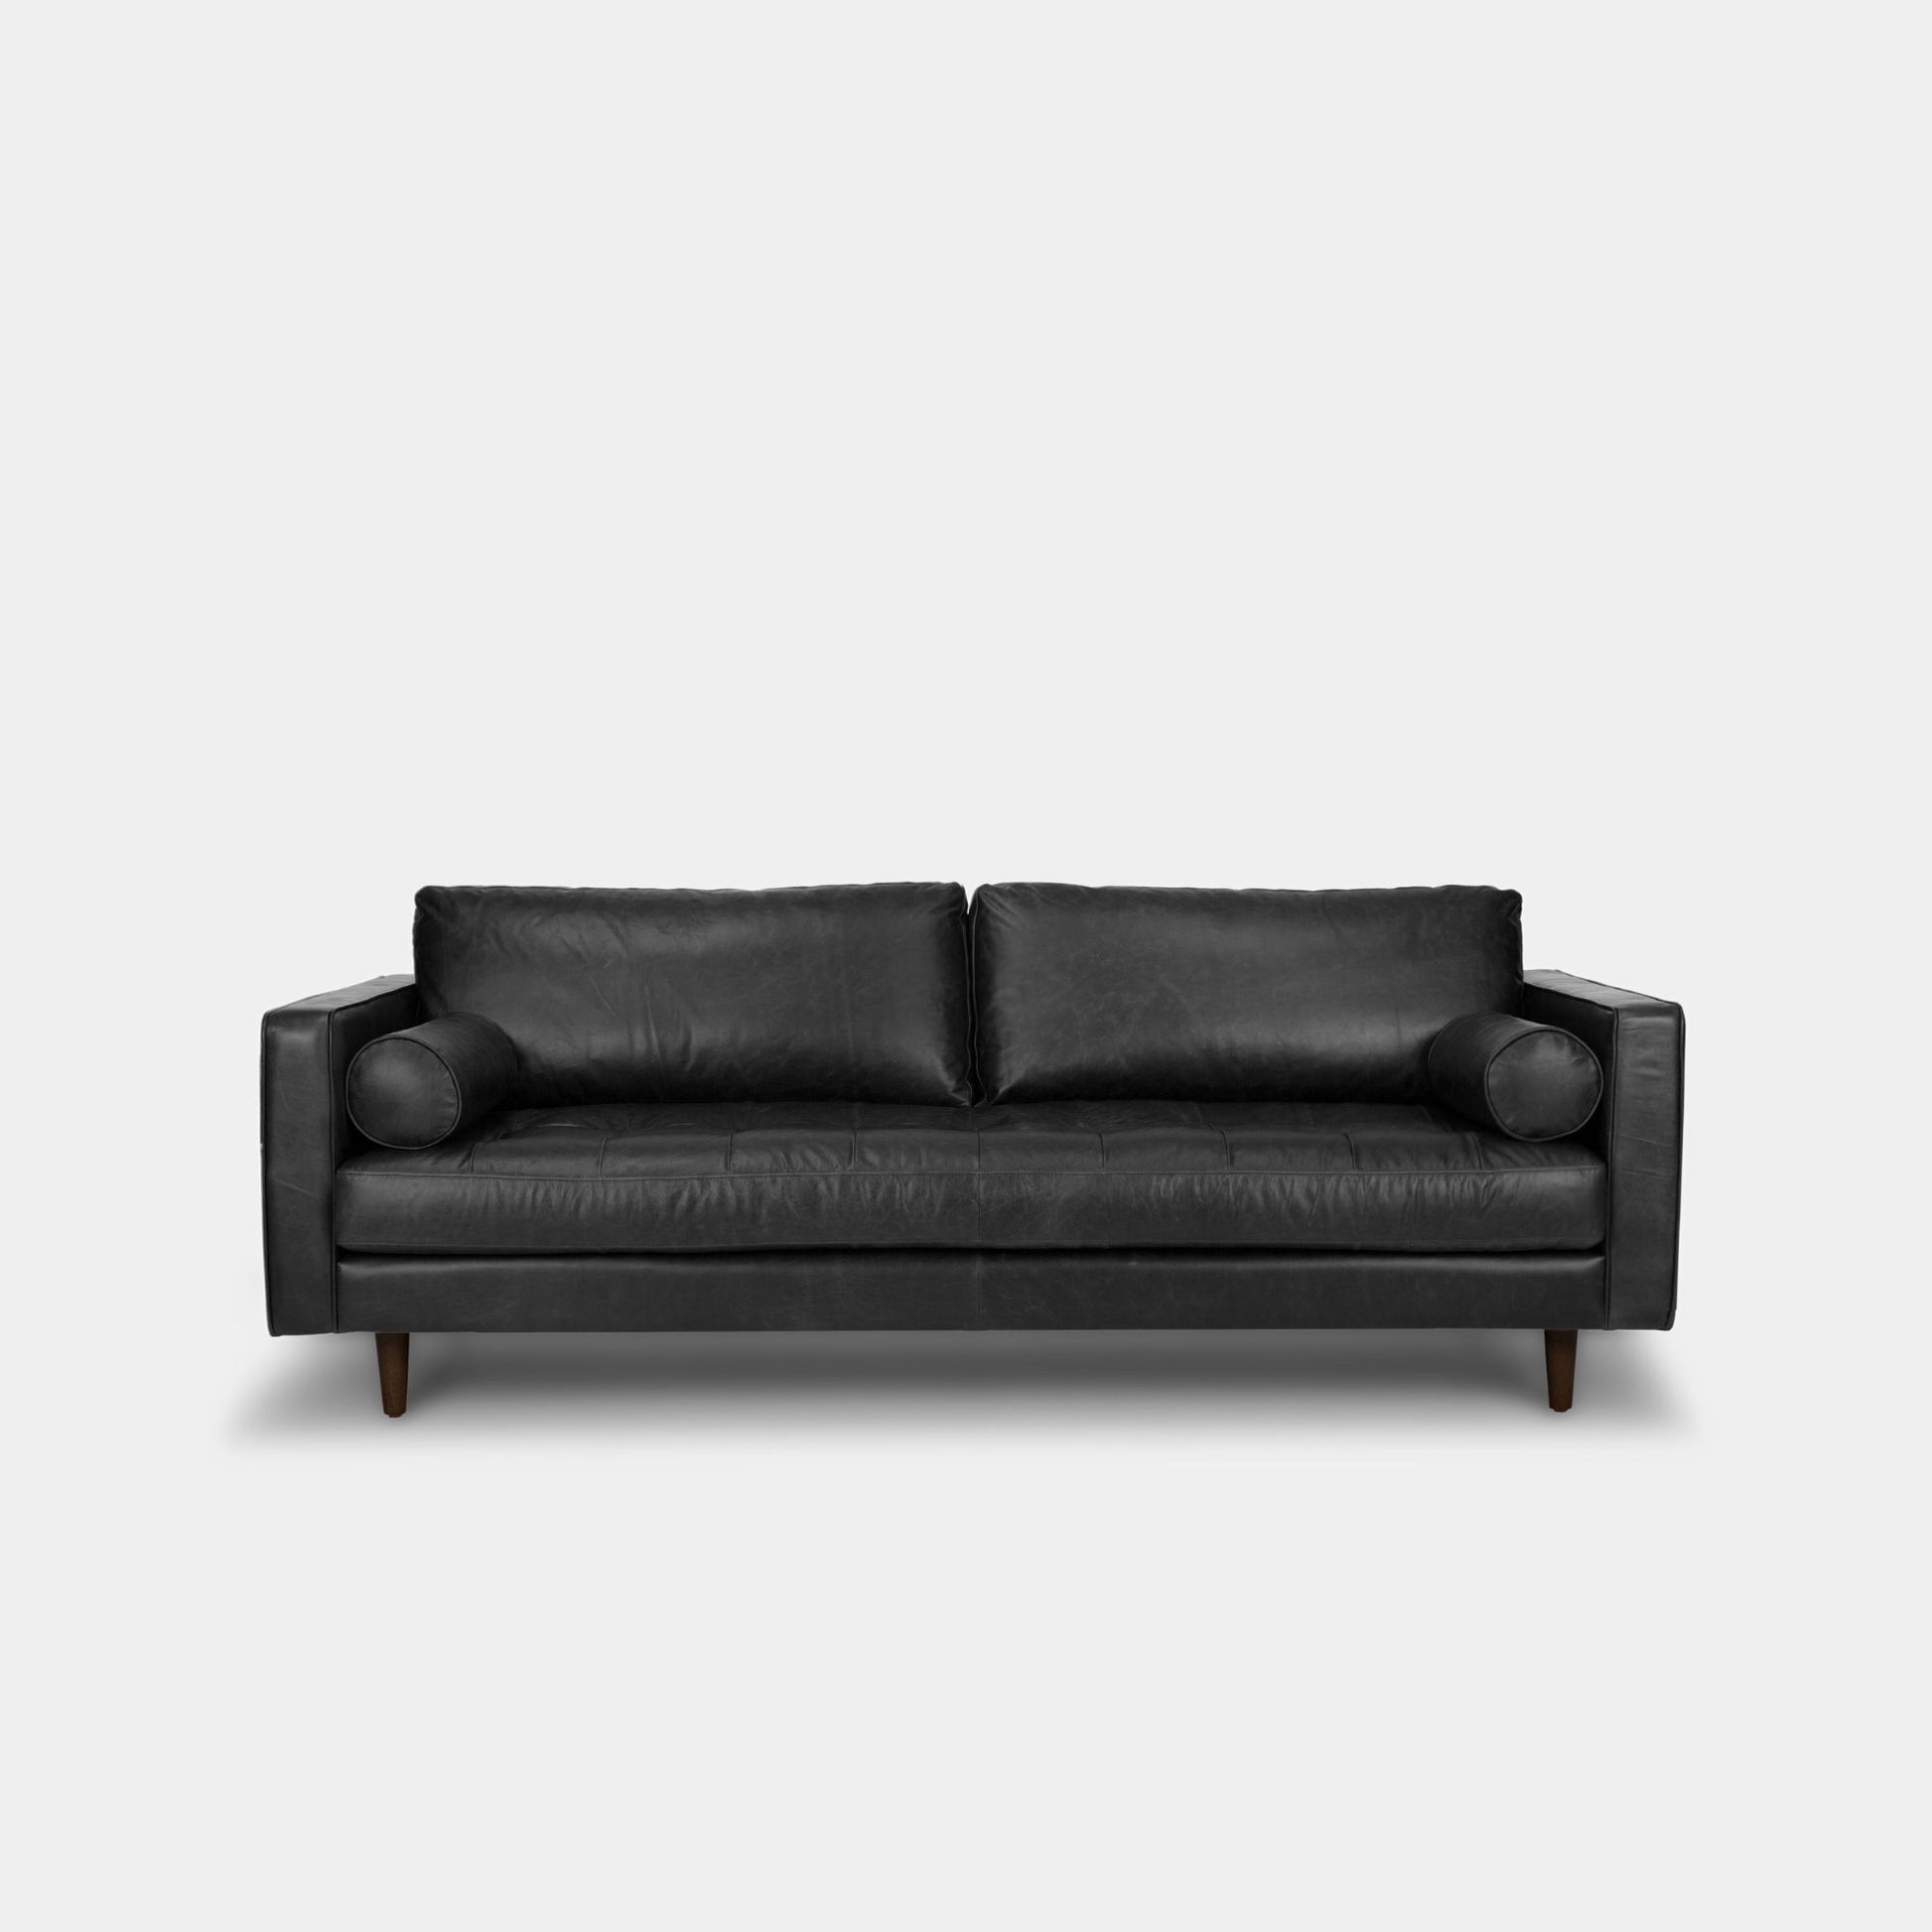 Castle half leather sofa black